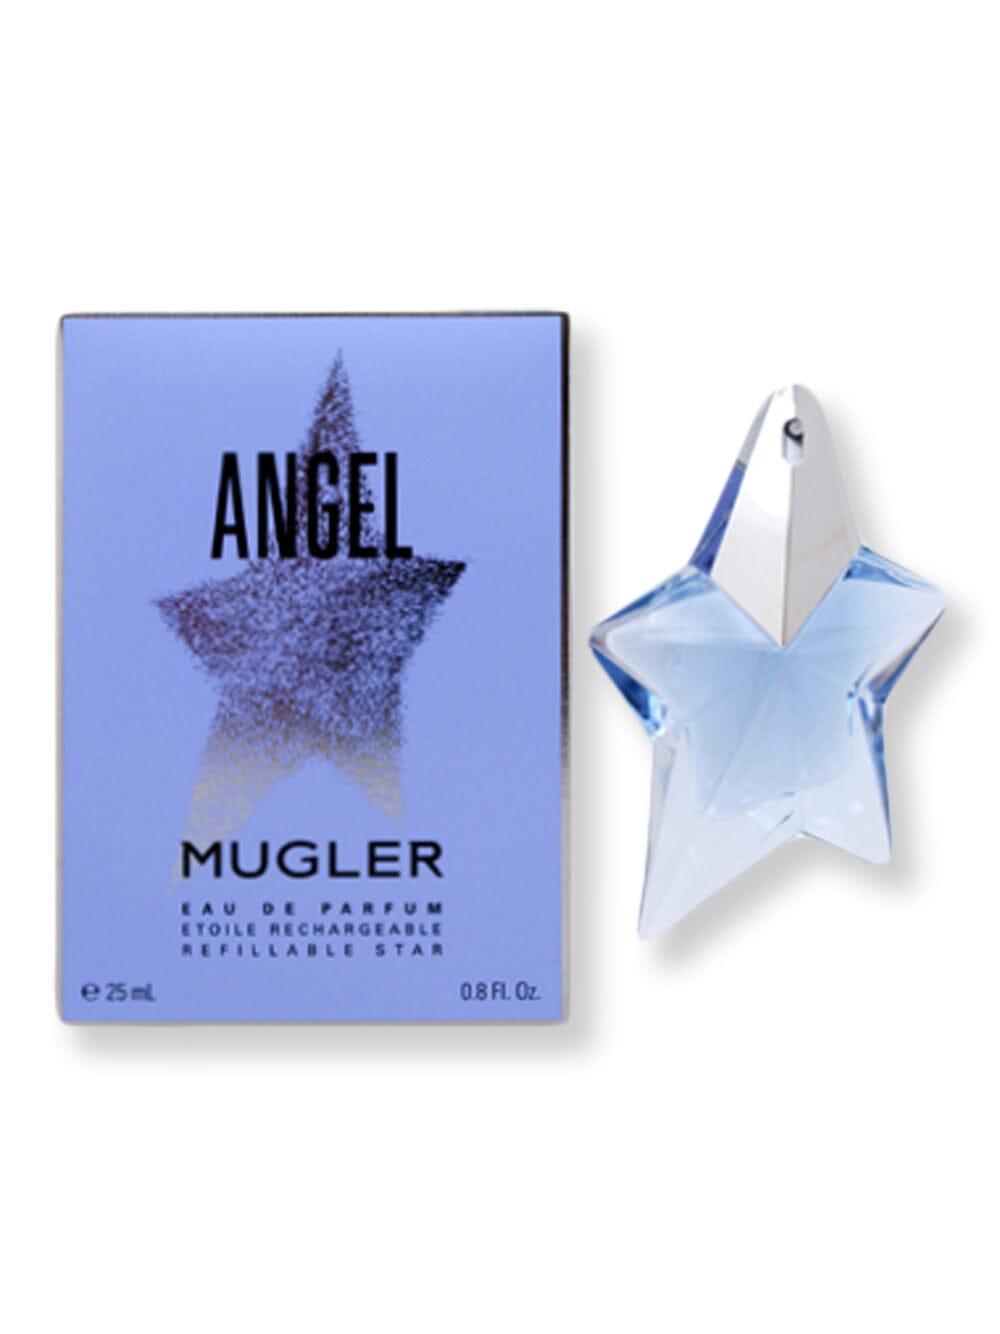 Thierry Mugler Thierry Mugler Angel EDP Spray Refillable 0.85 oz25 ml Perfume 